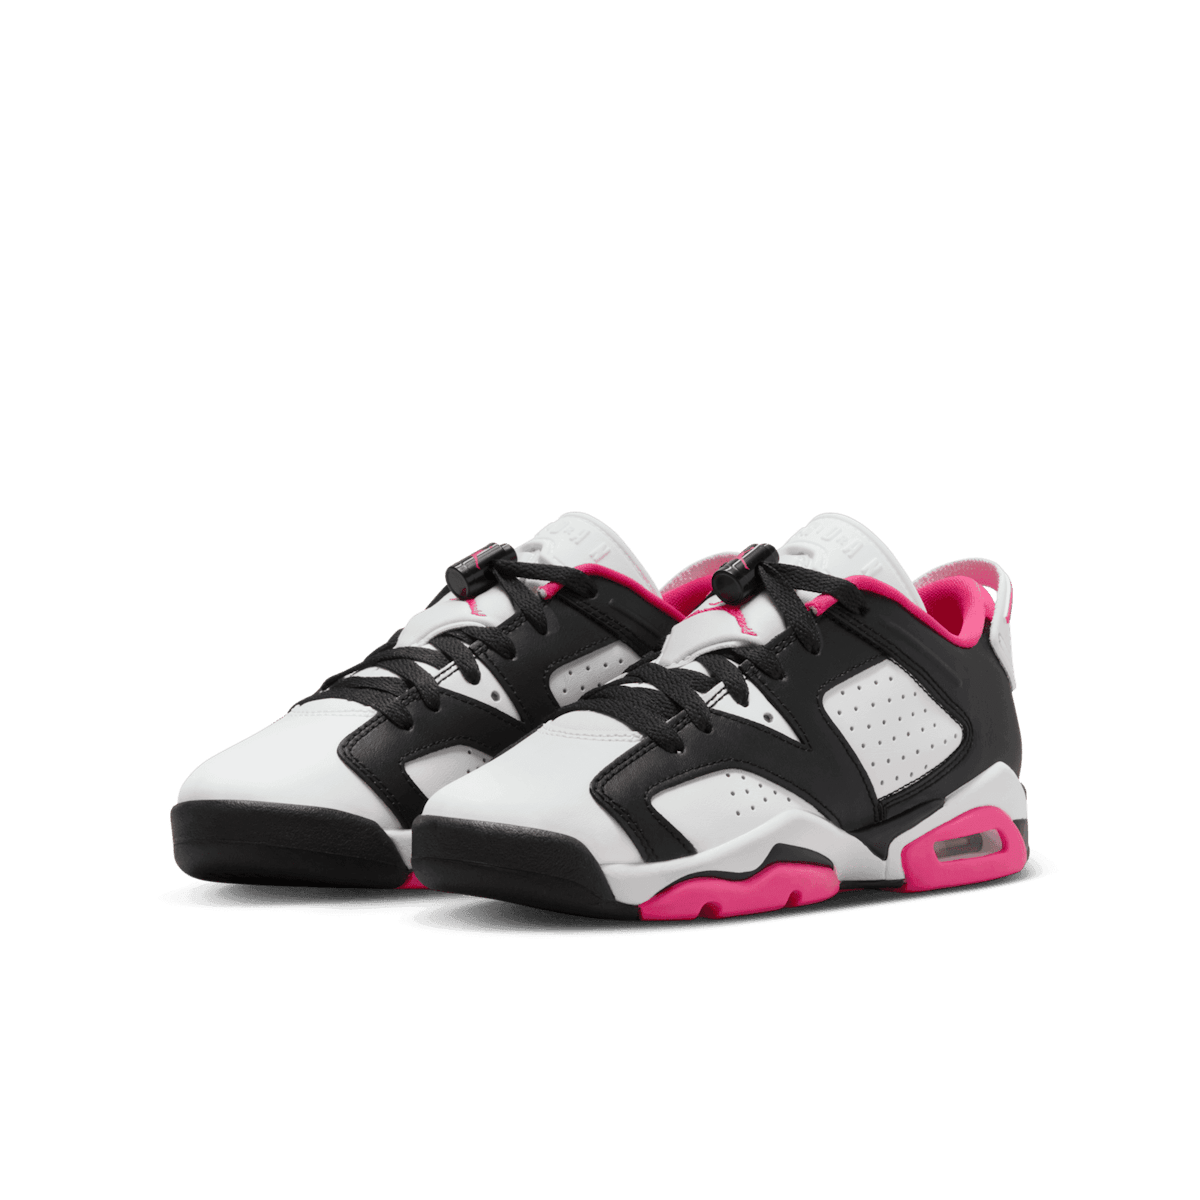 Air Jordan 6 Retro Low Fierce Pink (GS) Angle 2